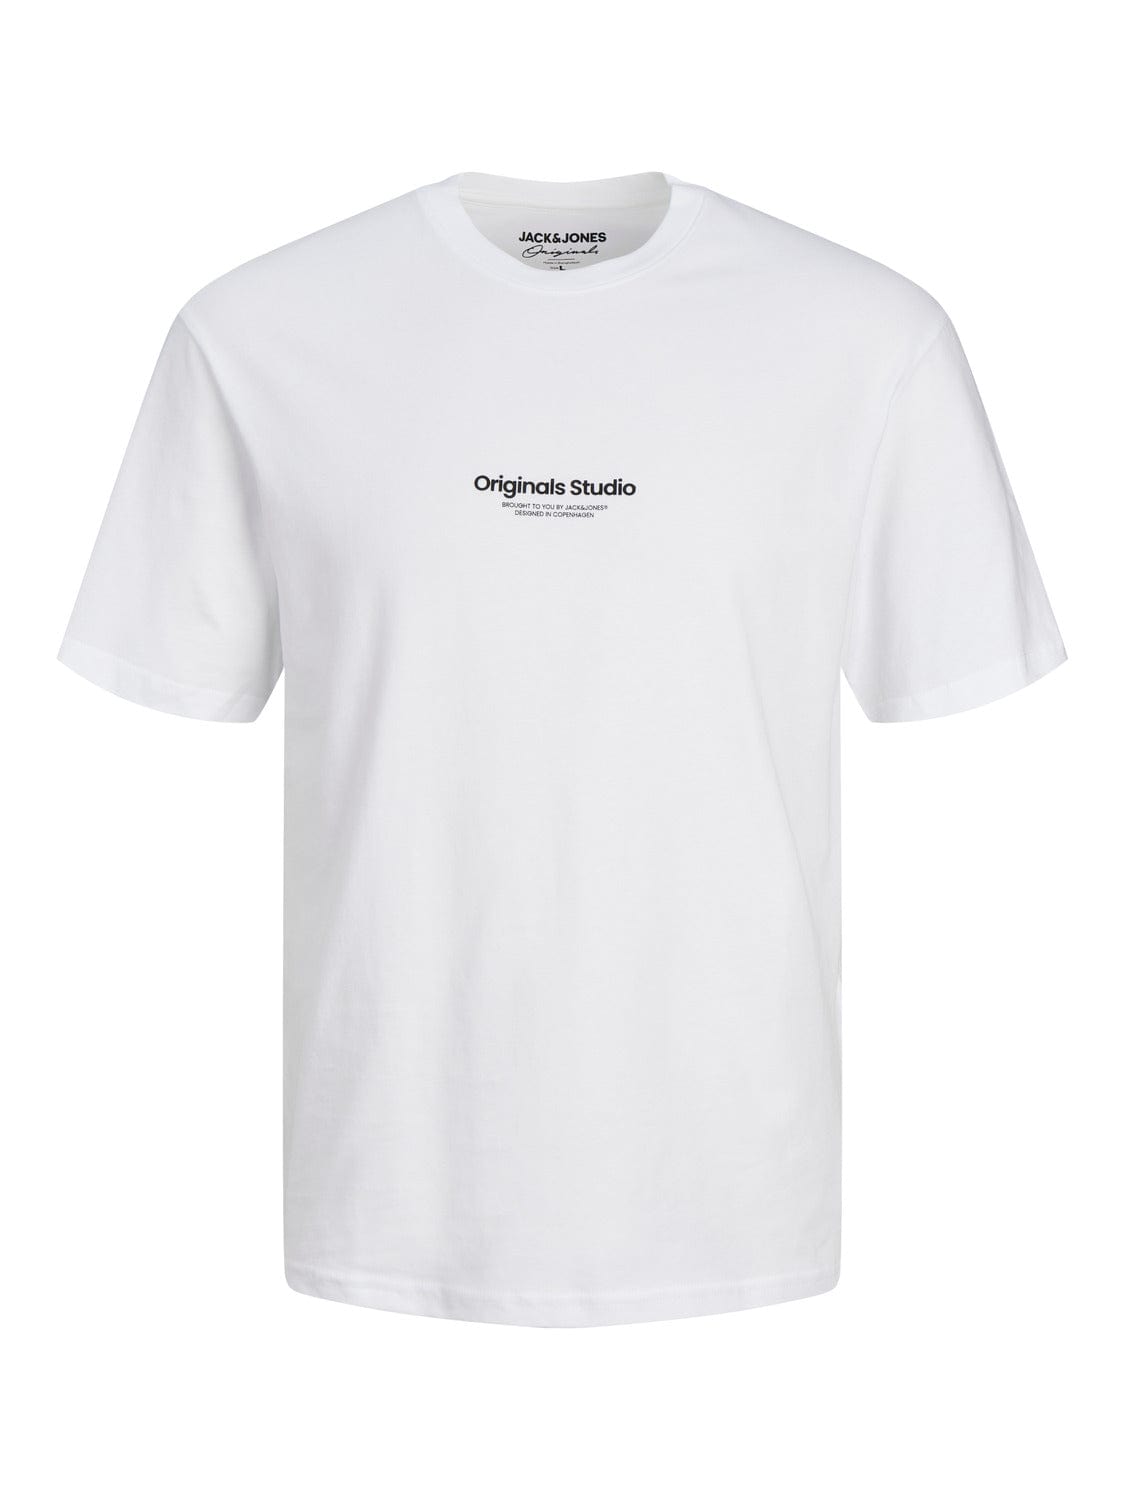 Camiseta de manga corta blanca - JORVESTERBRO